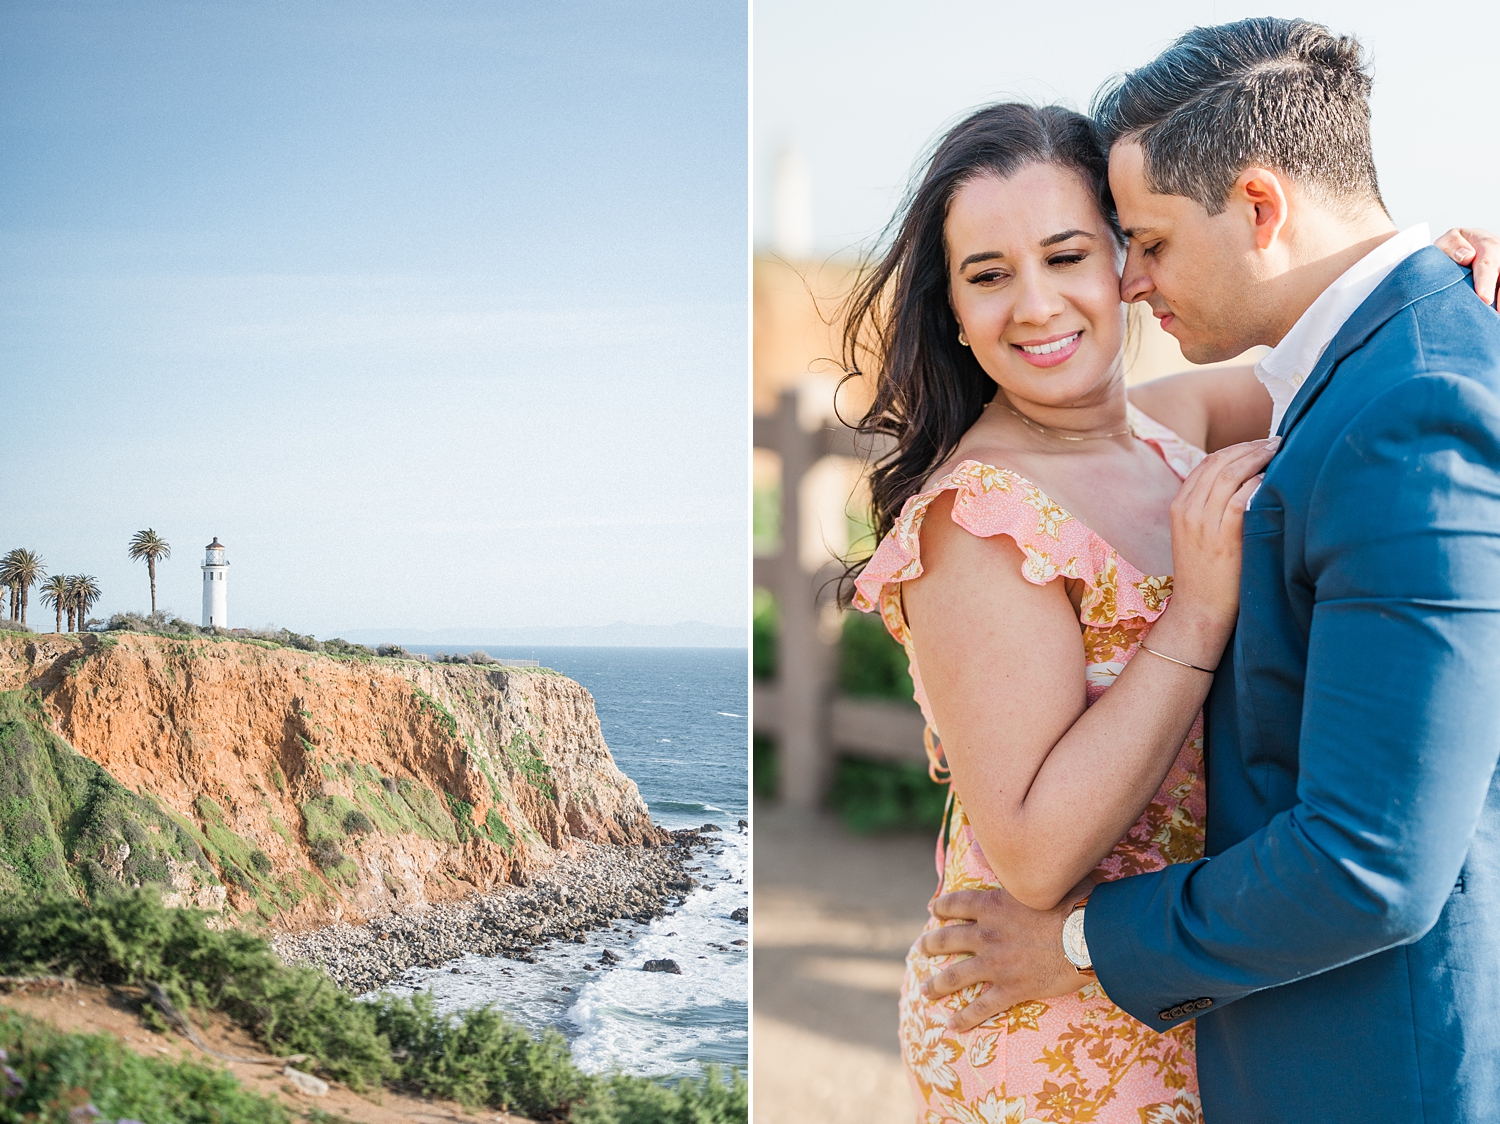 Palos Verdes Lighthouse Engagement Photos at Sunset | Wedding Photographer -140.jpg